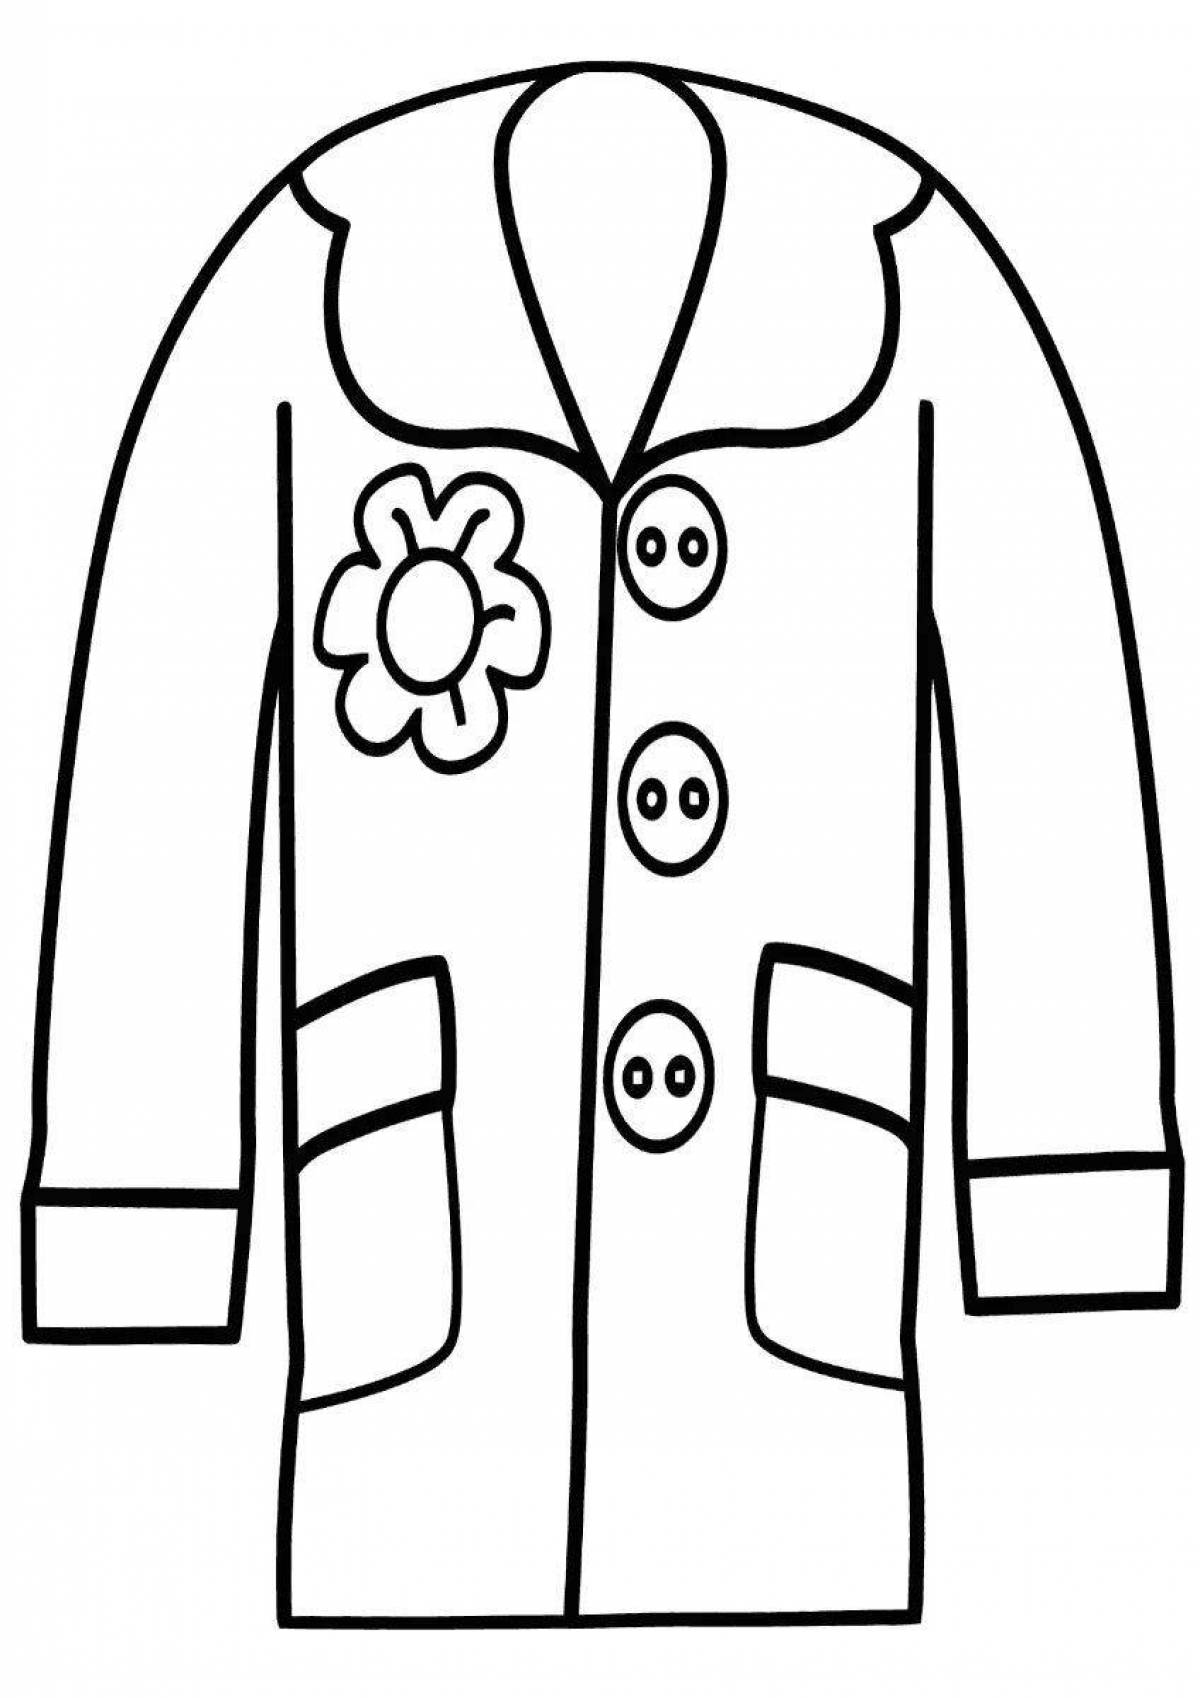 Trendy coat coloring for kids